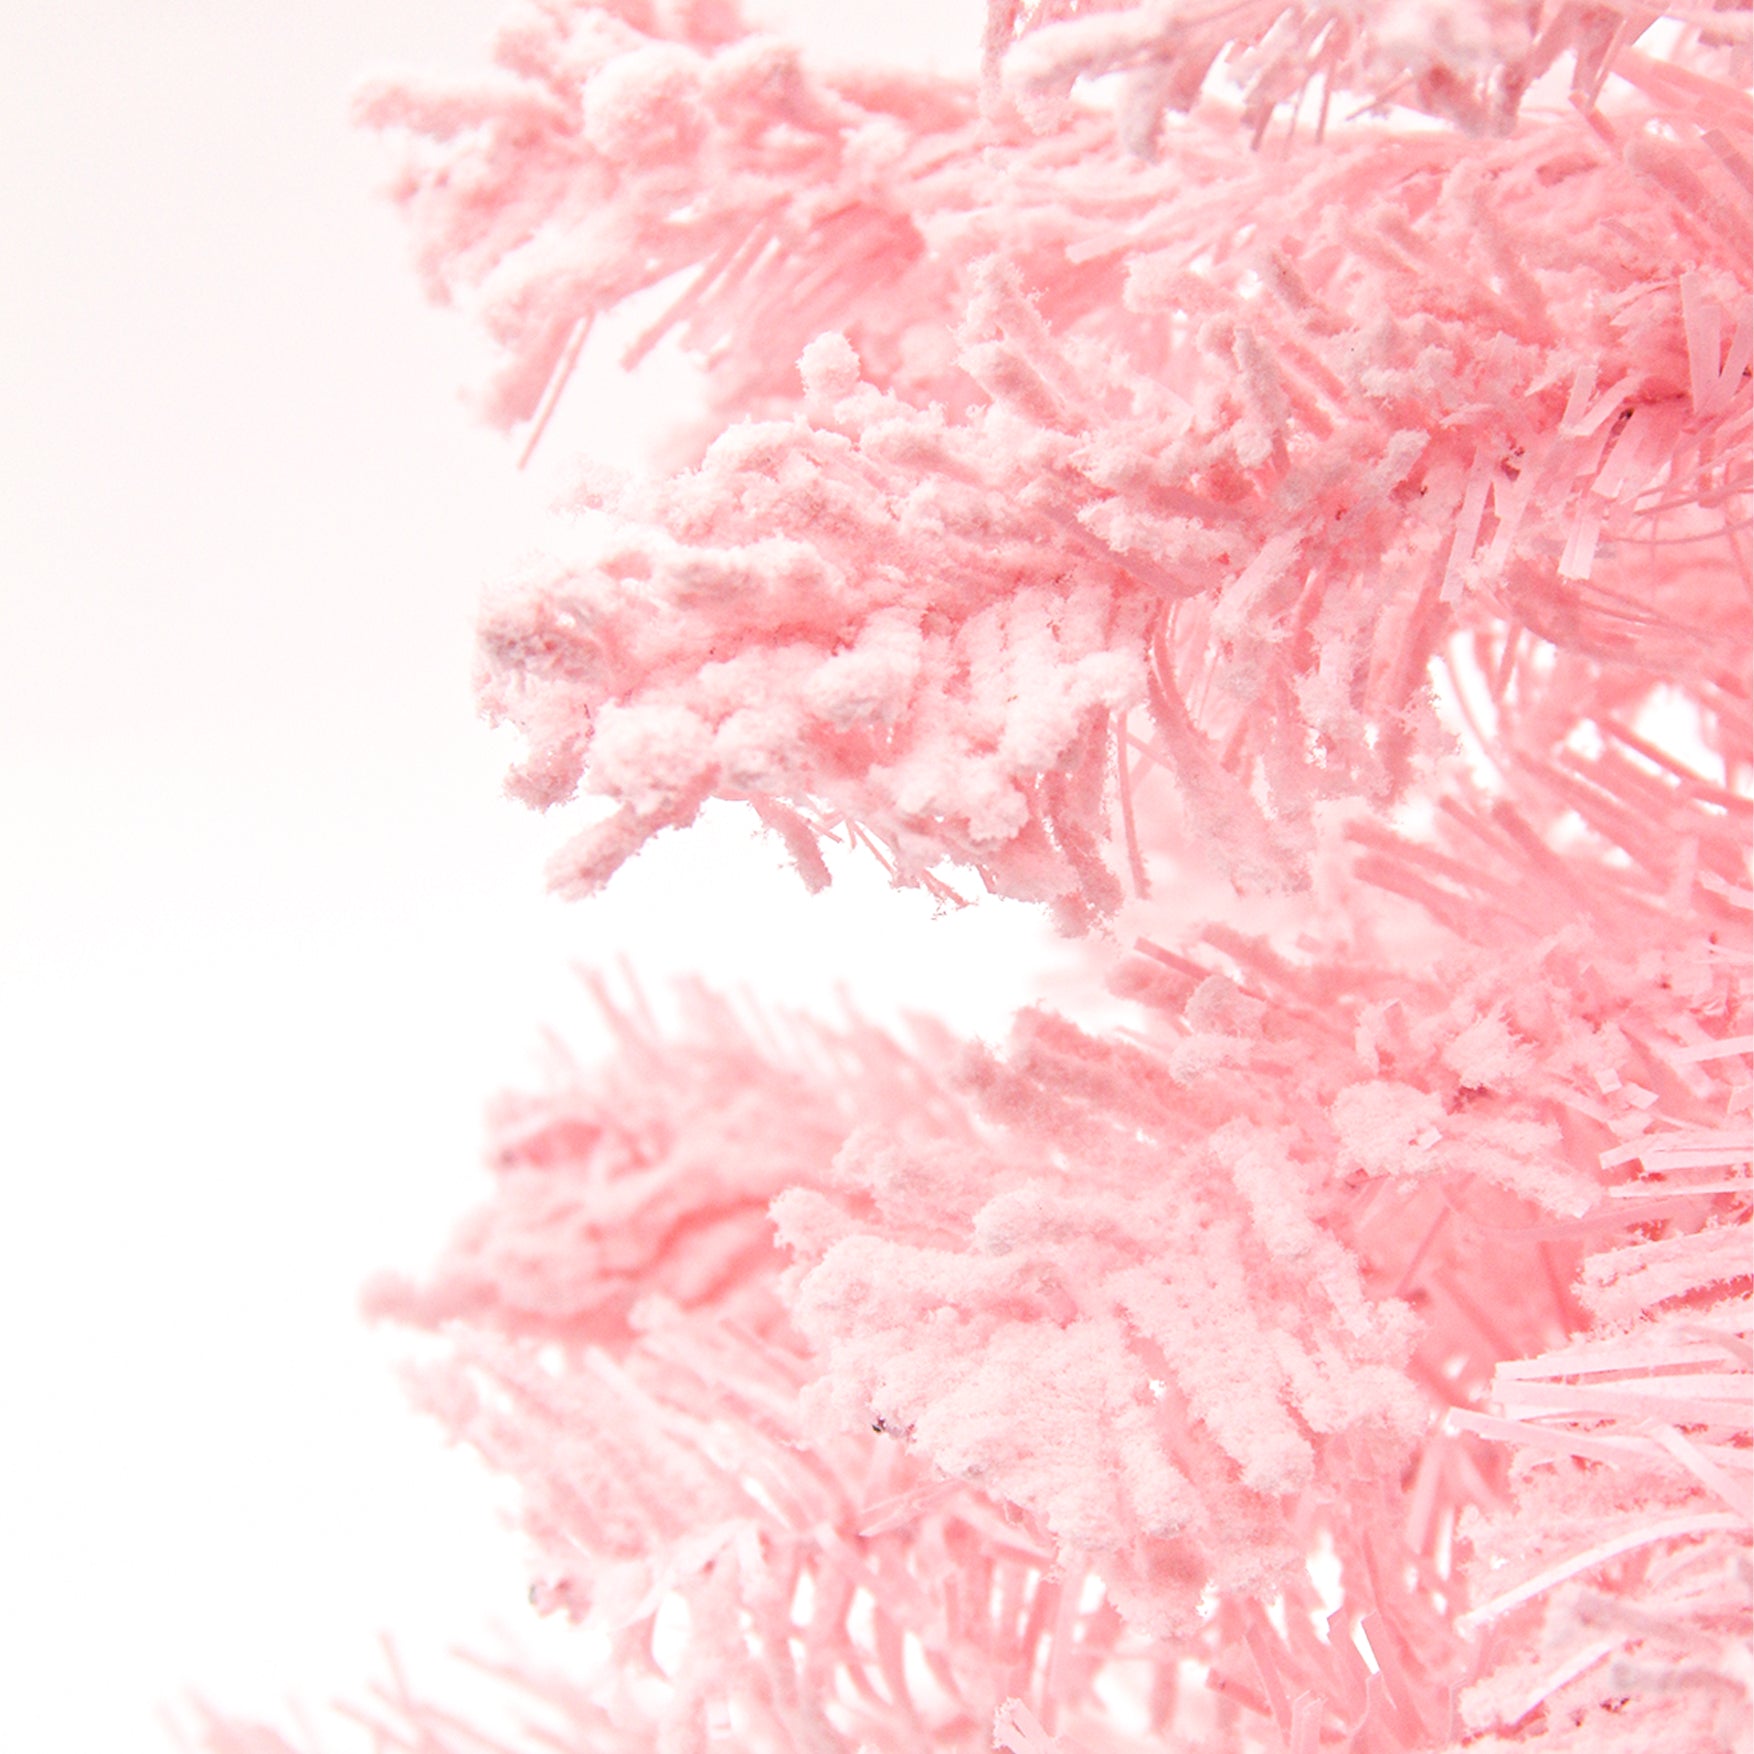 60cm Flocked Sakura Pink Artificial Christmas Tree